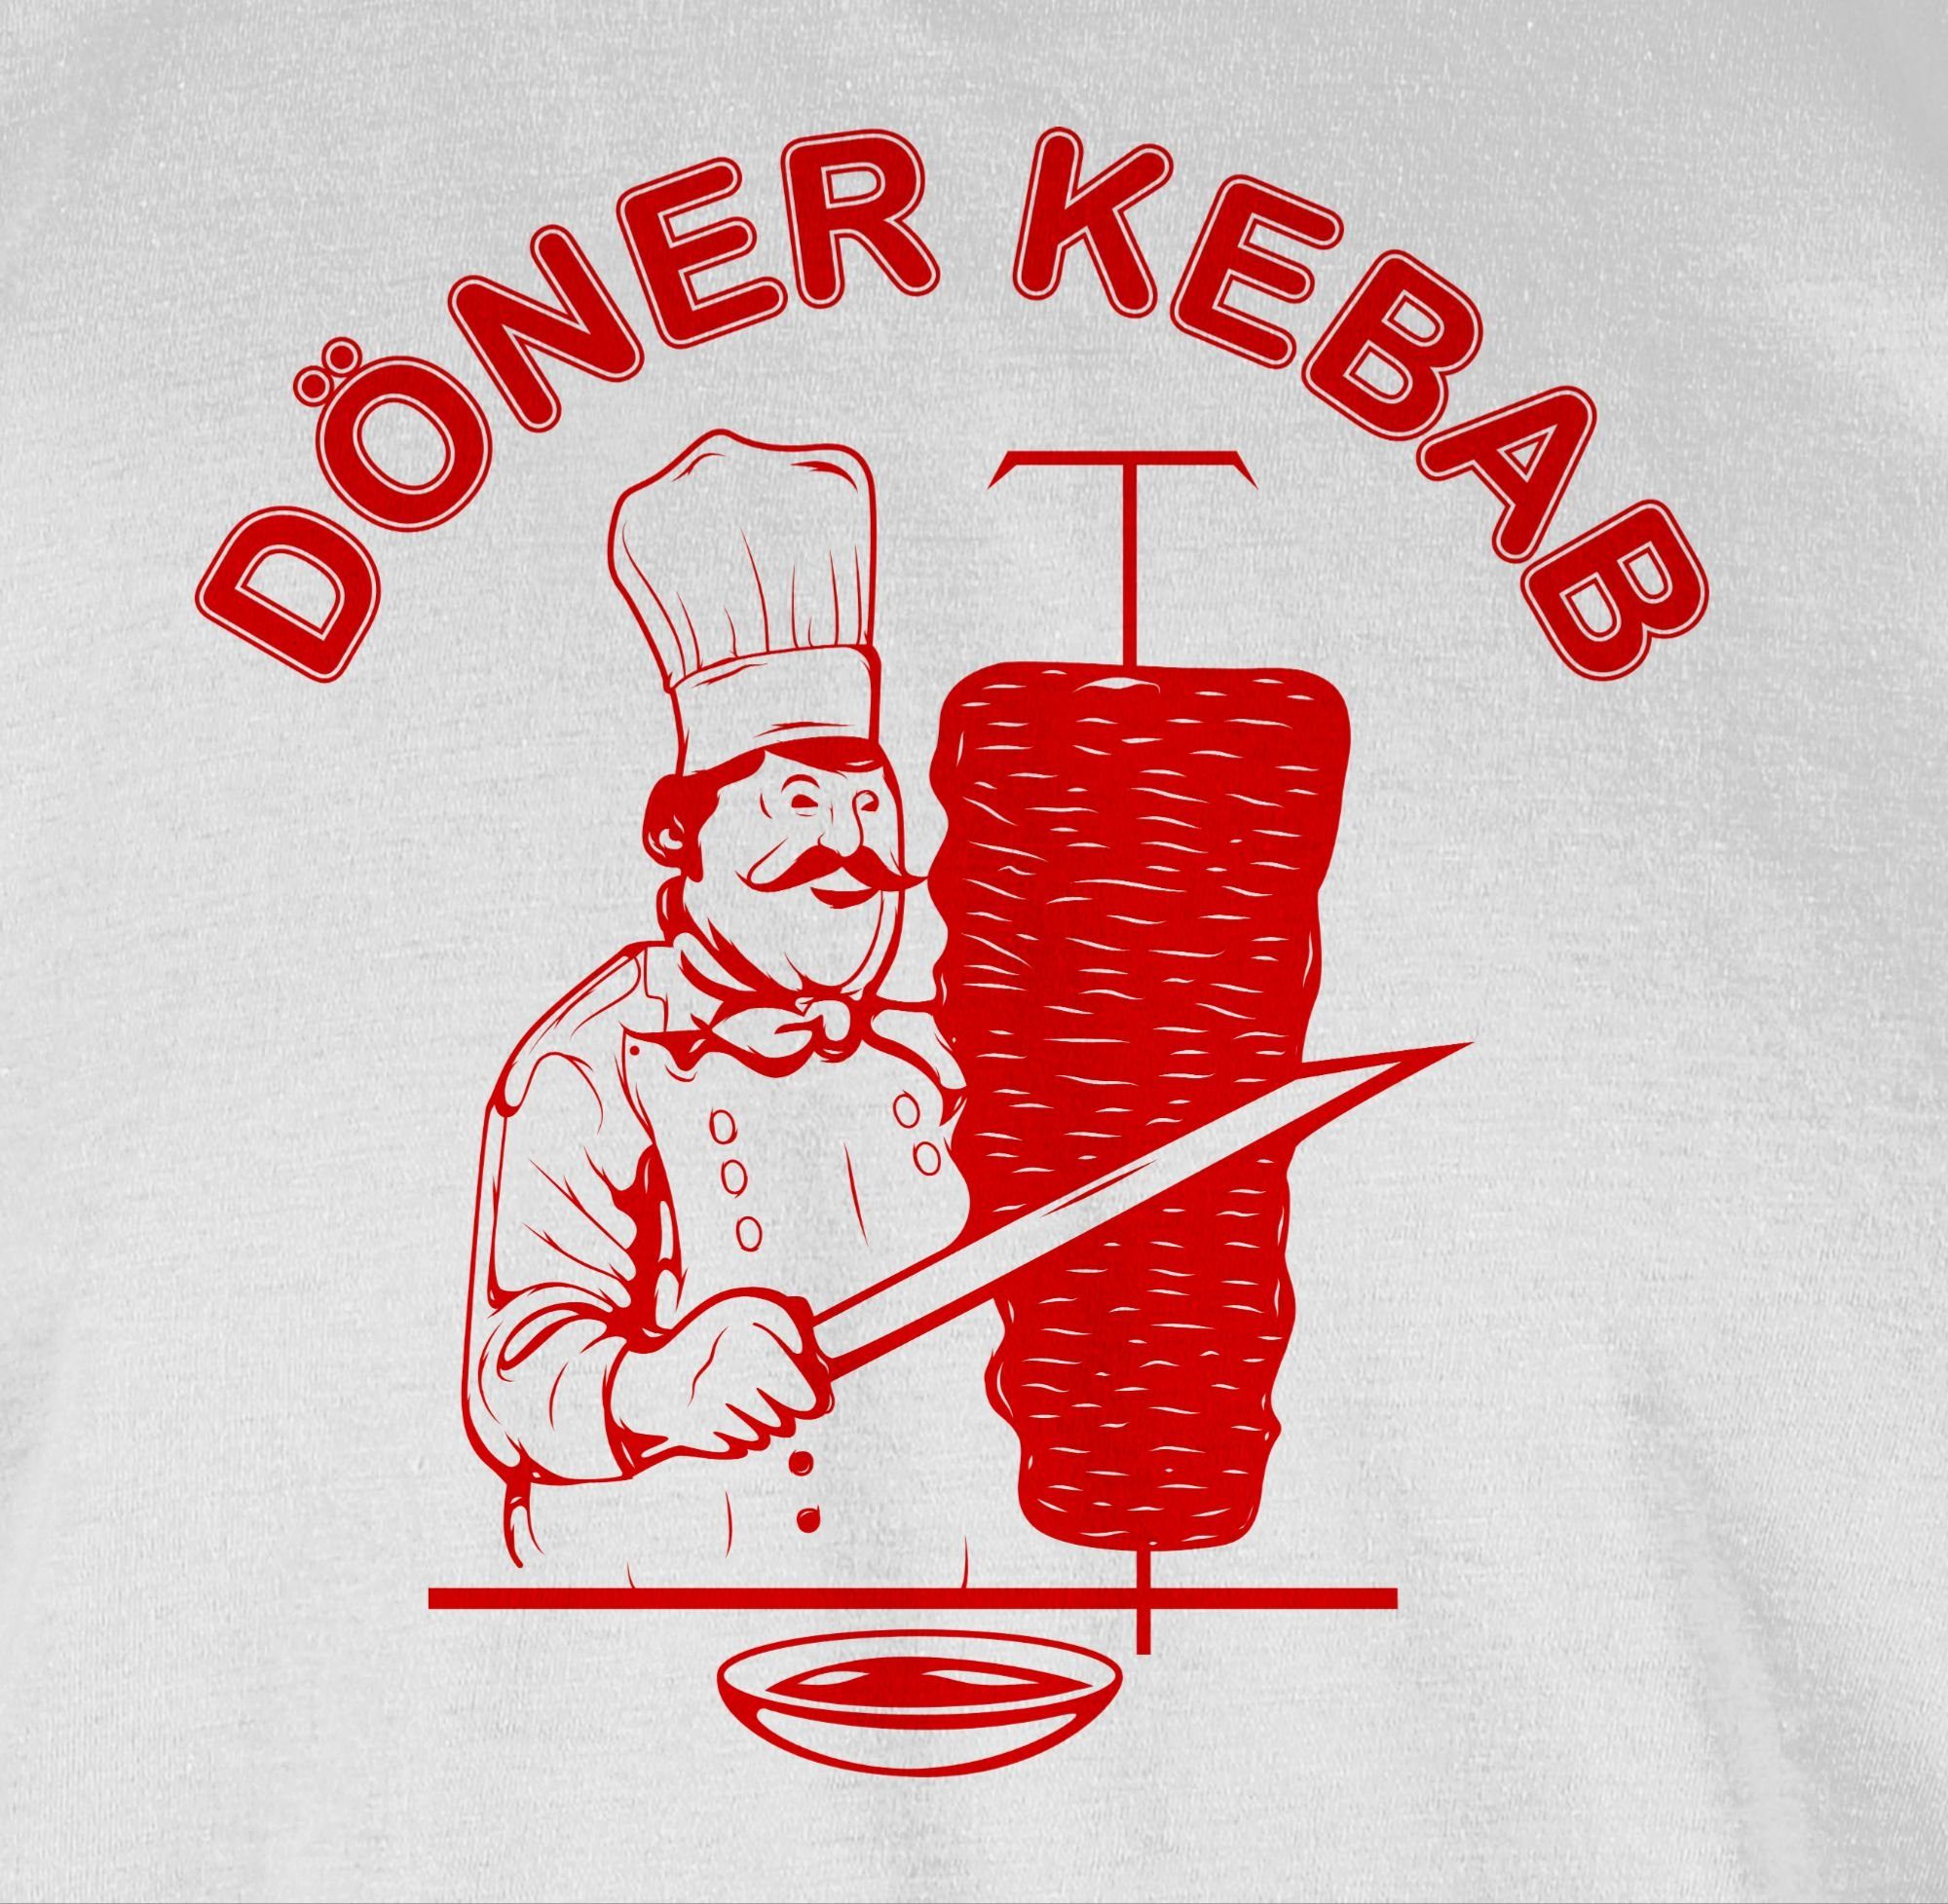 Shirtracer T-Shirt Original Döner Kebab 02 & Karneval Weiß Logo Fasching